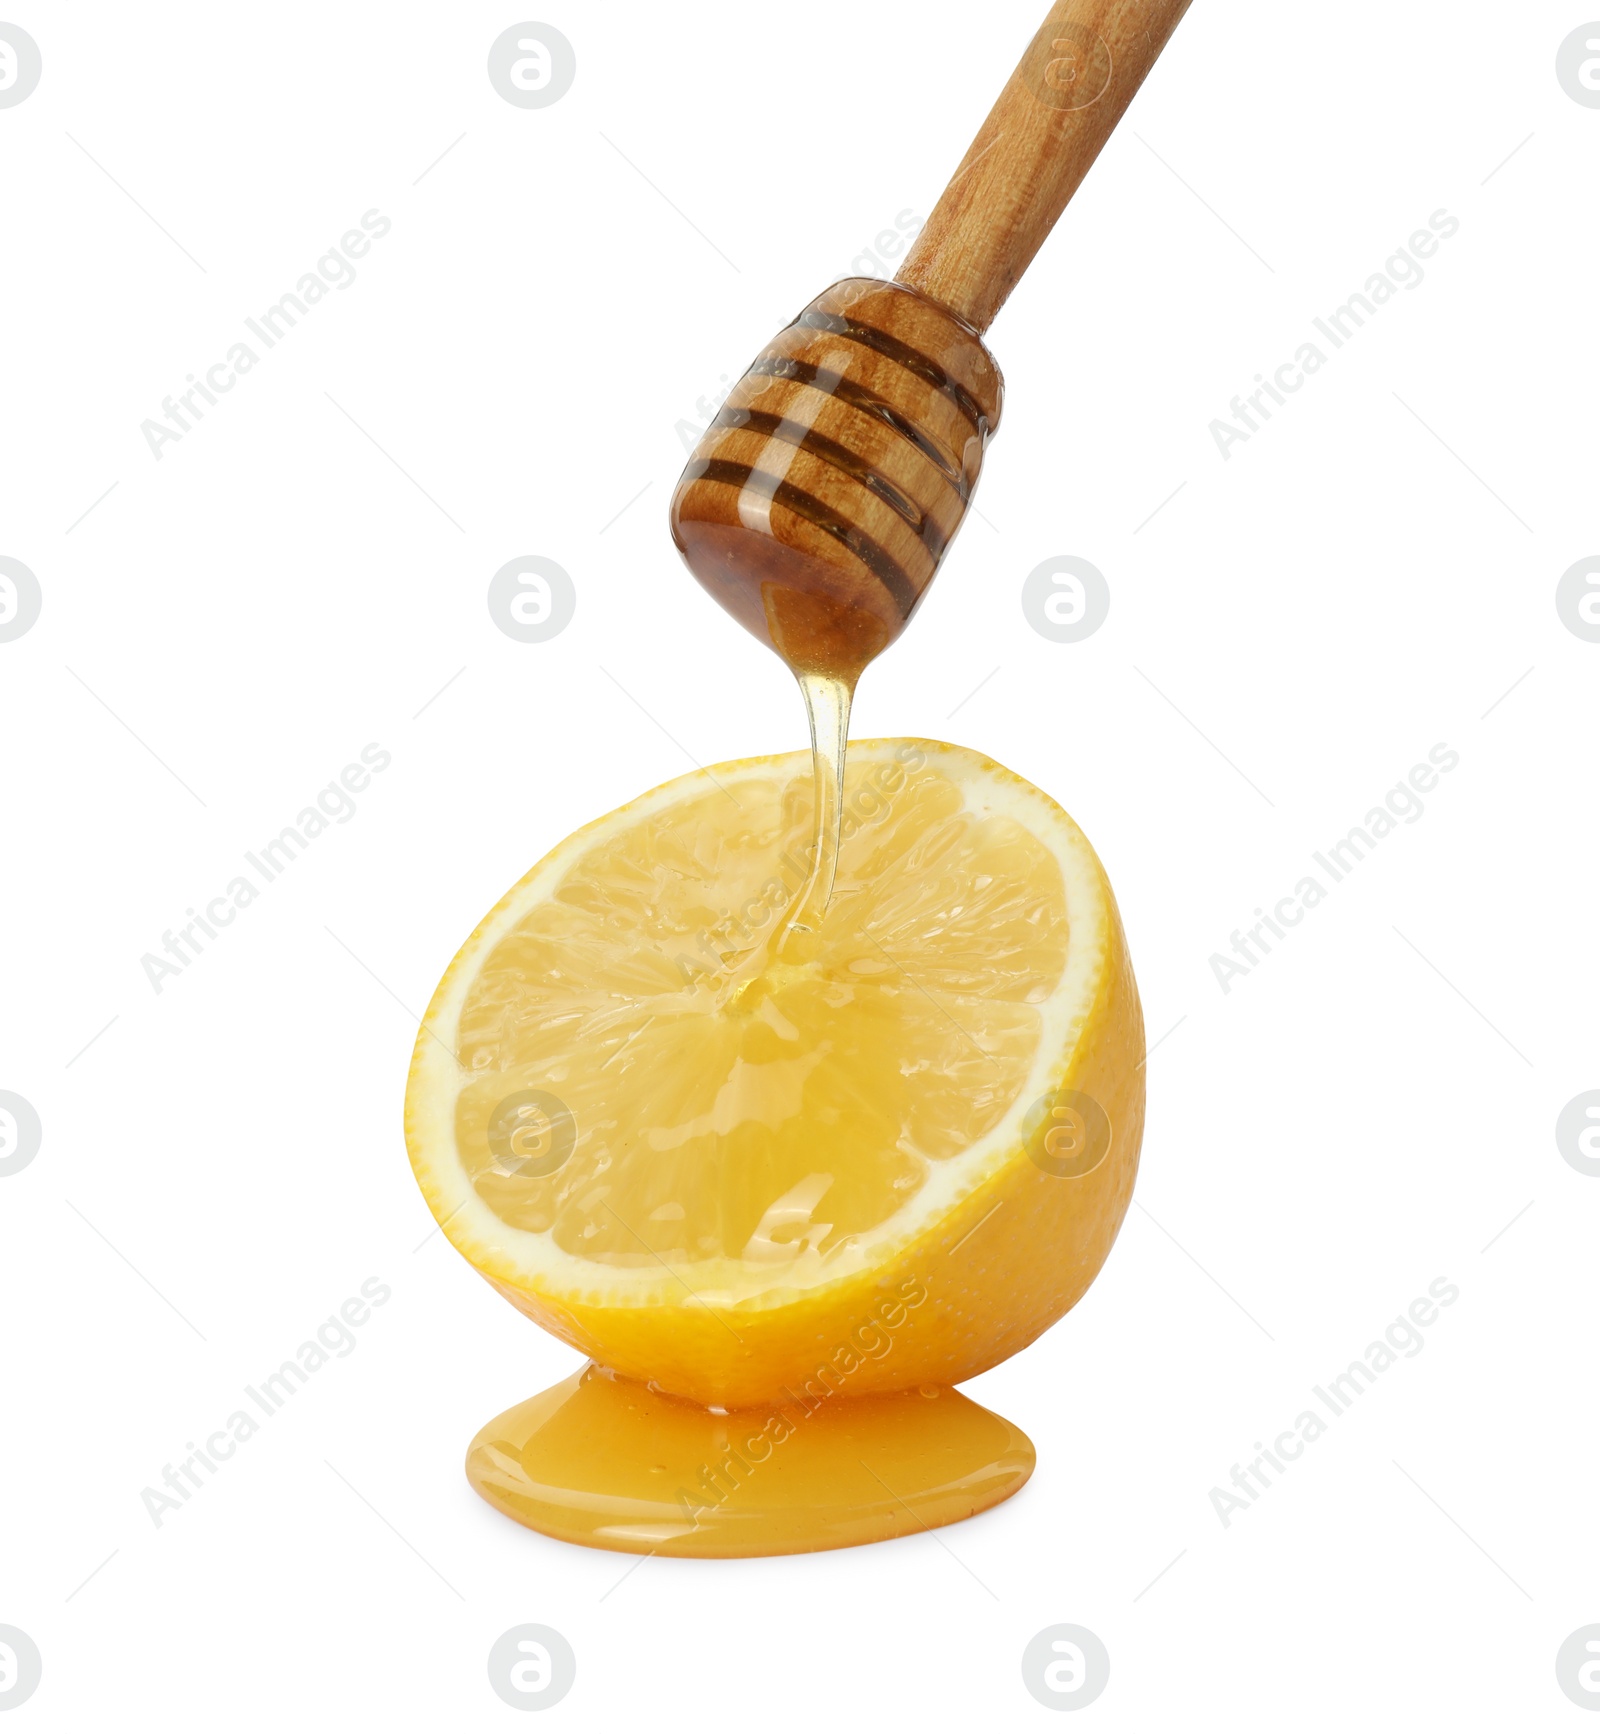 Photo of Dripping sweet honey from dipper onto fresh lemon on white background